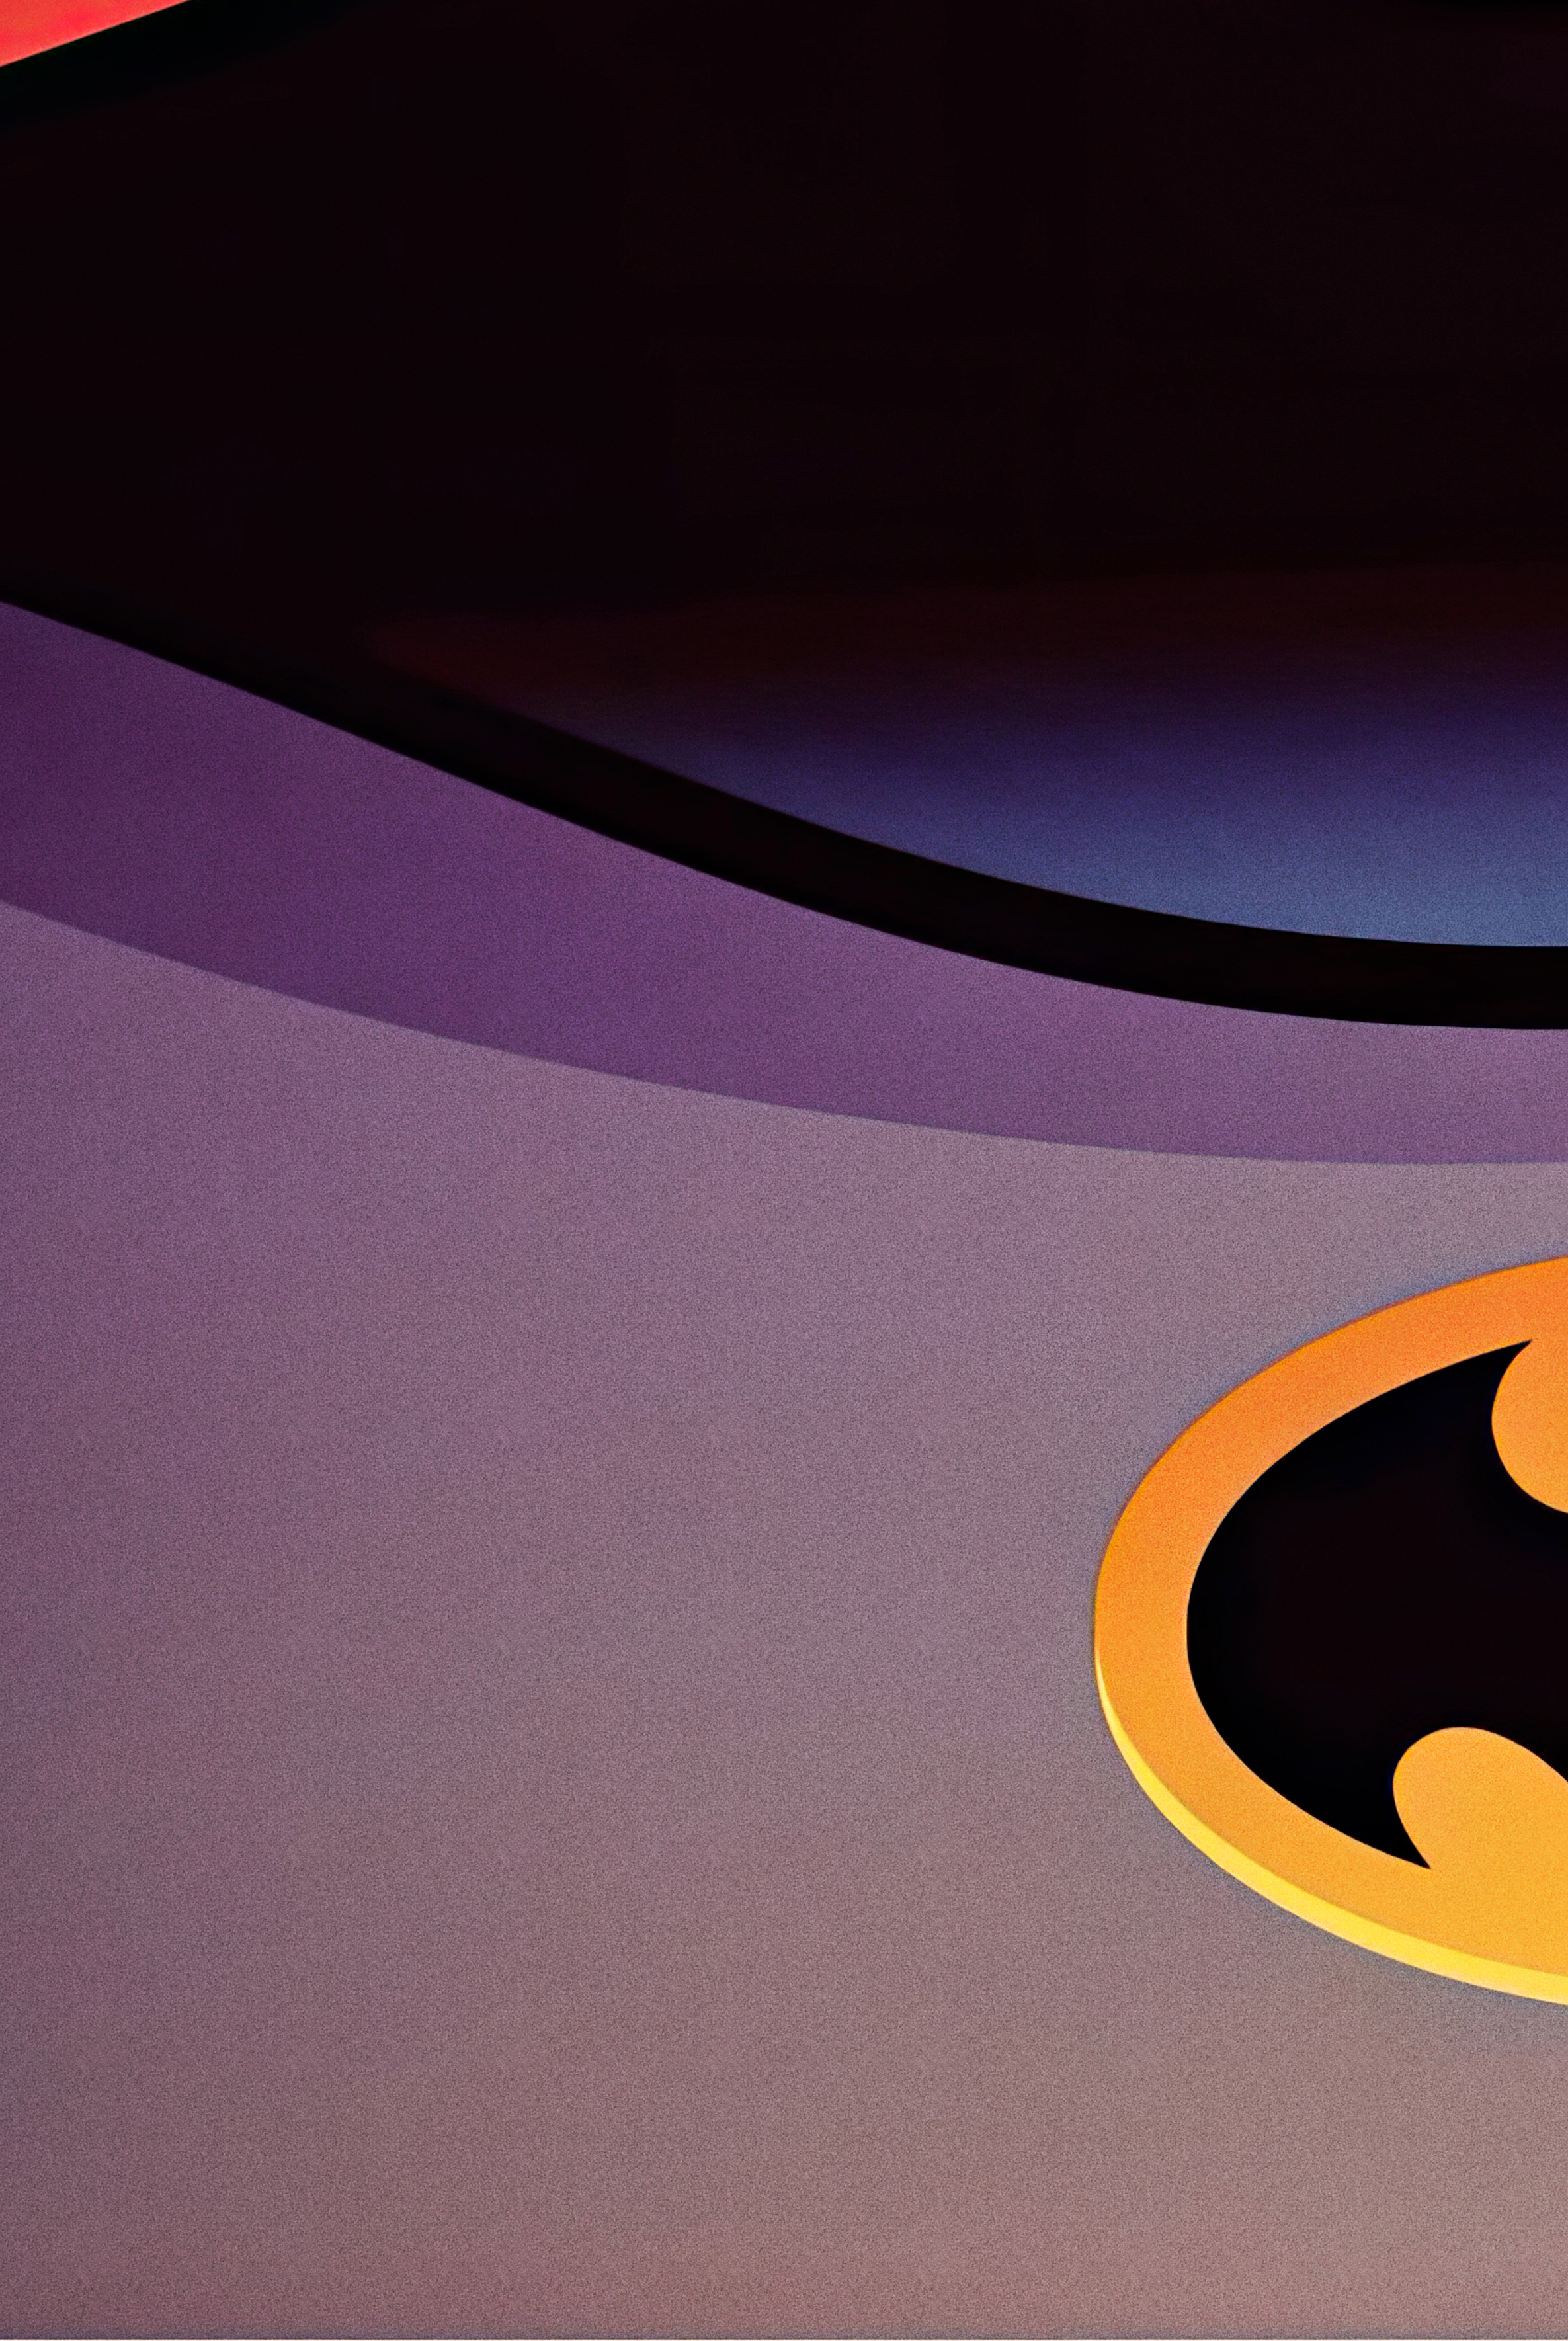 Batman: The Animated Series Phone Wallpaper